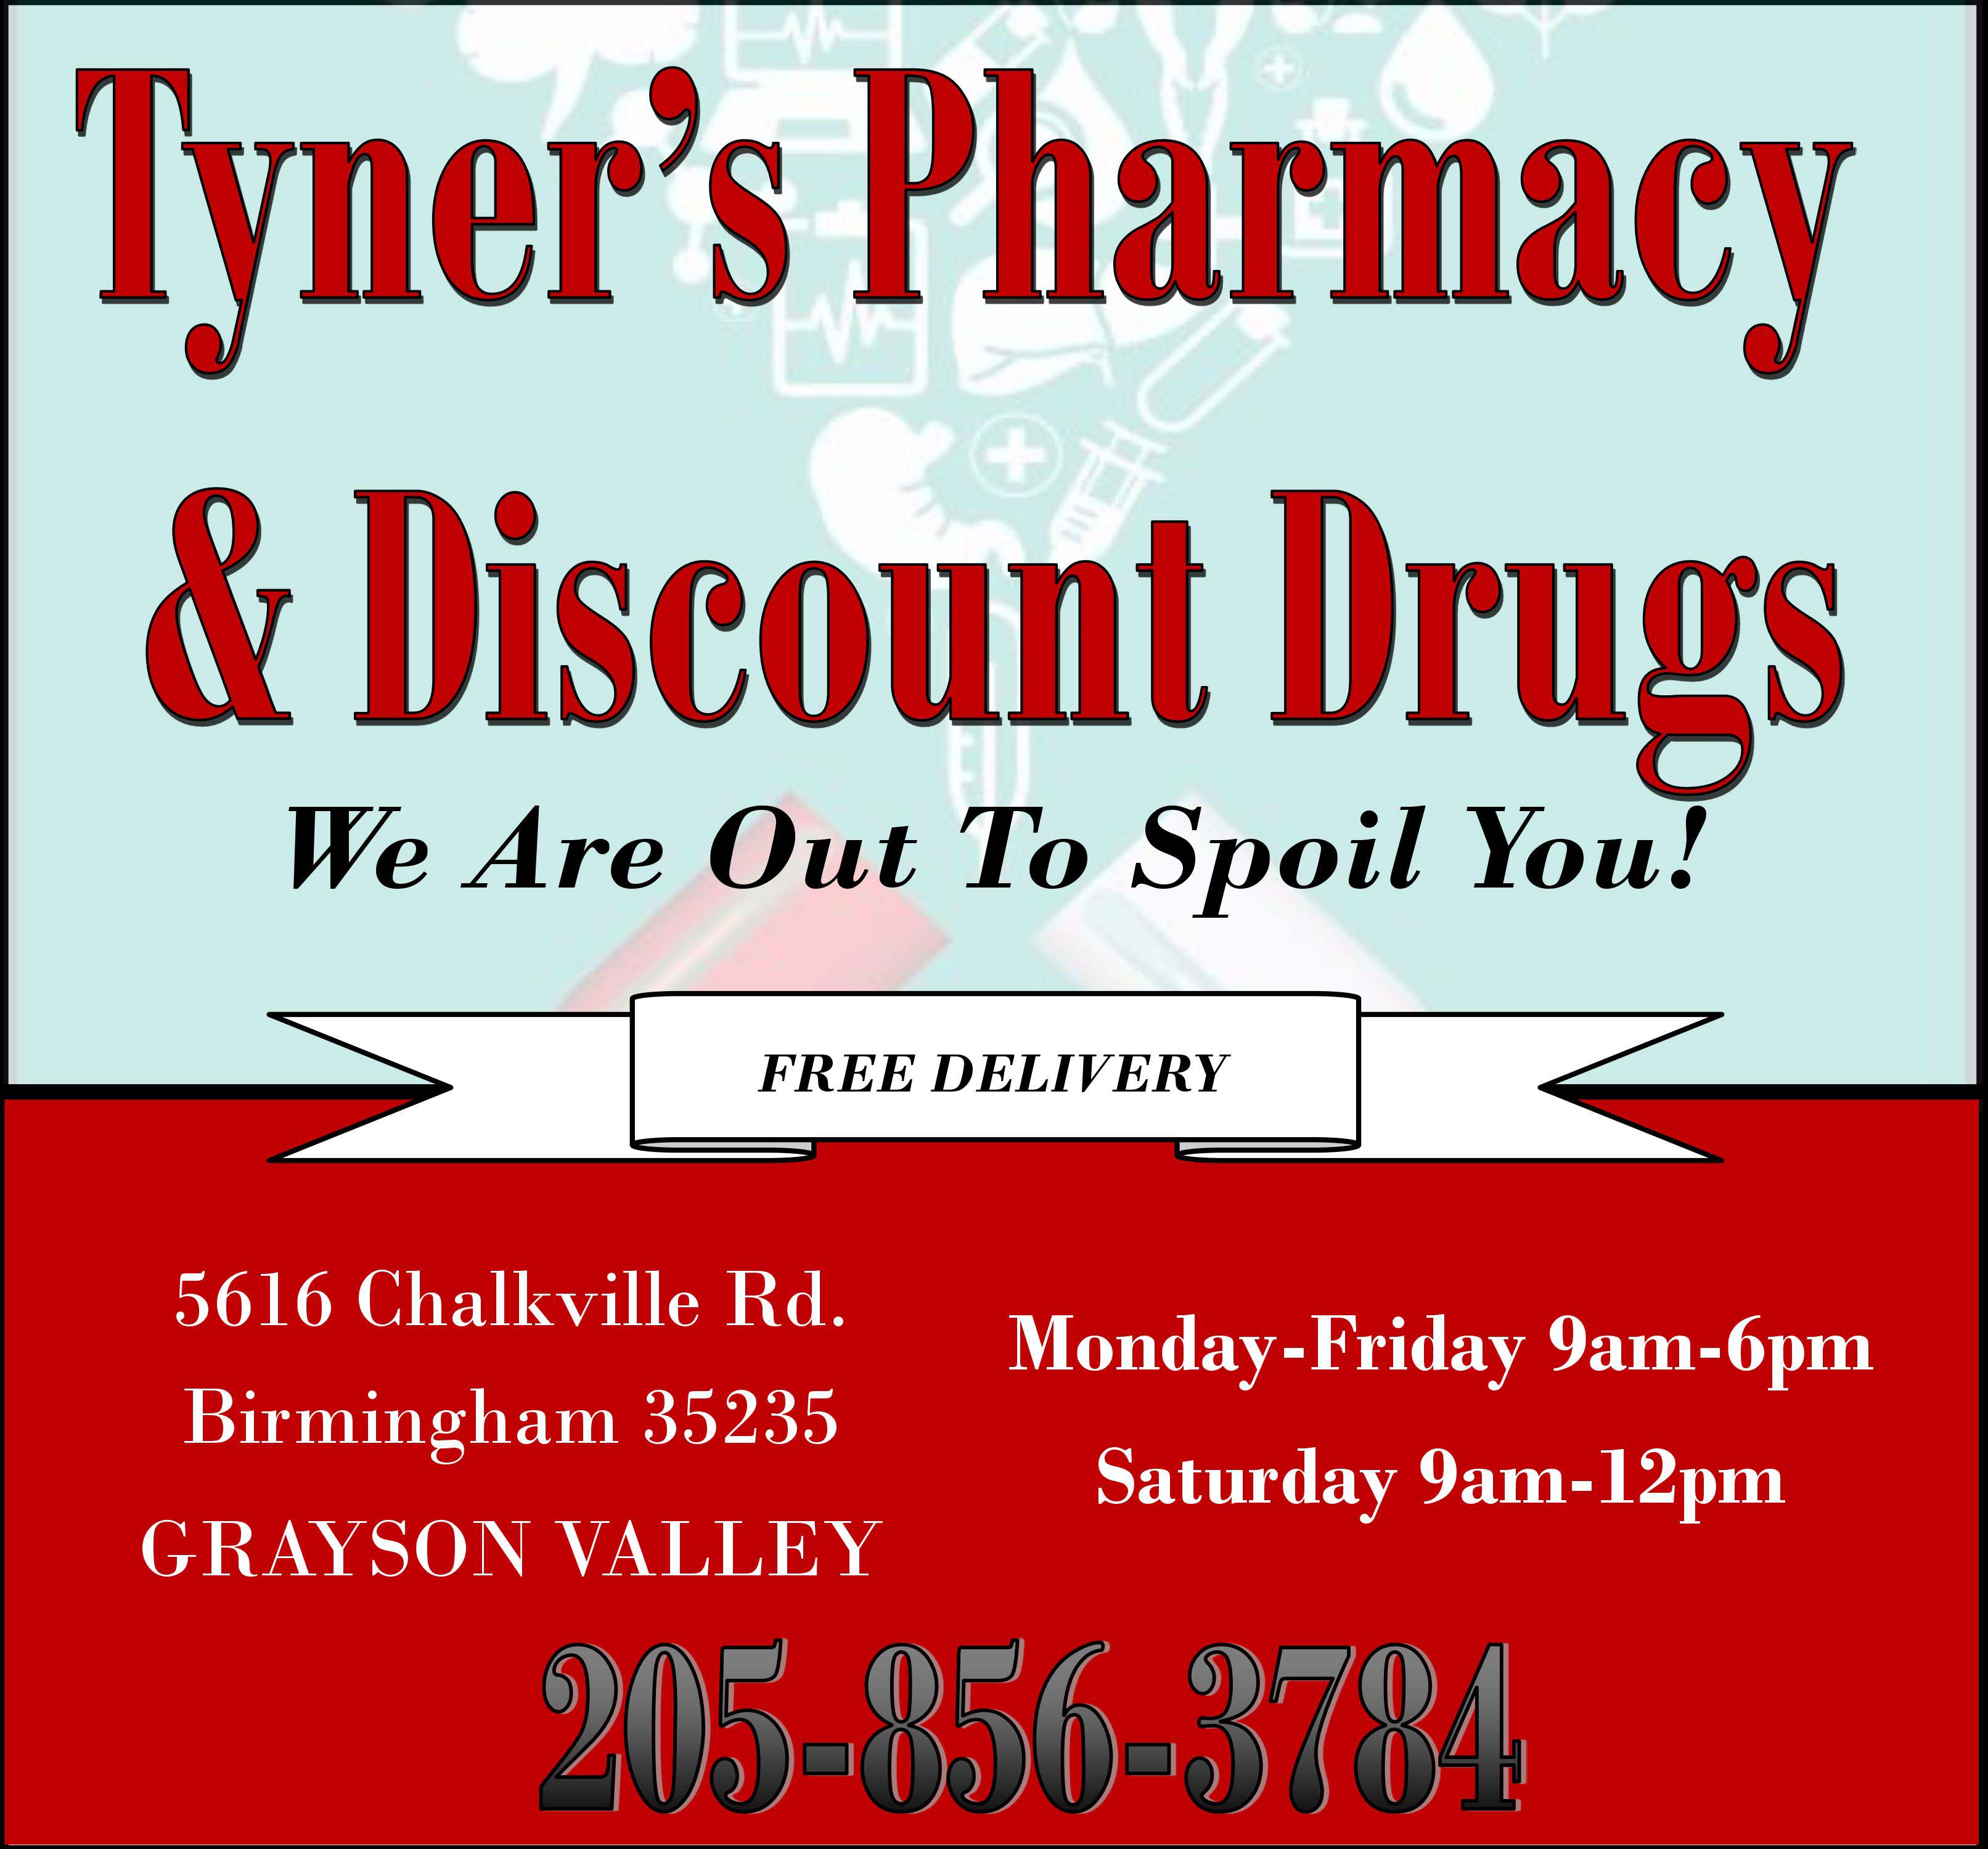 Tyner's Pharmacy proud of 36-year history